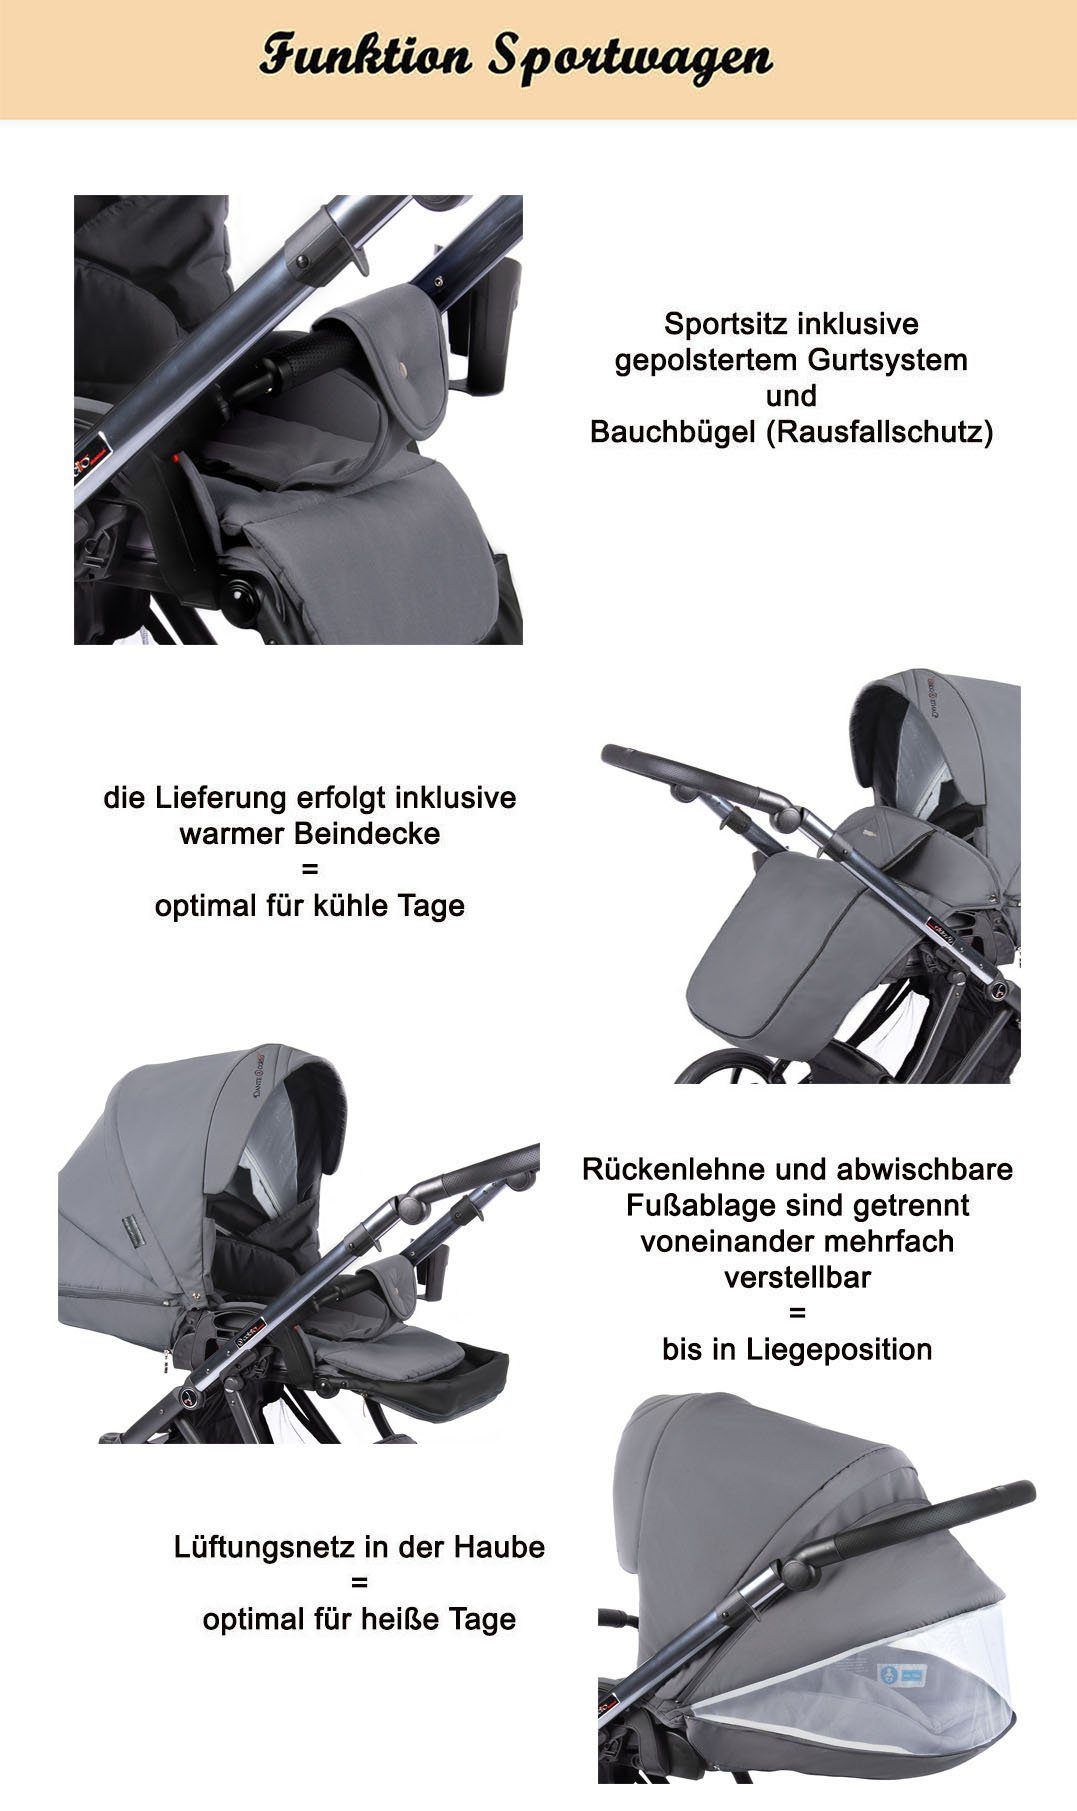 11 in 2 - Farben in Dante 1 Teile Türkis kupfer 16 = babies-on-wheels Gestell - Kombi-Kinderwagen Kinderwagen-Set